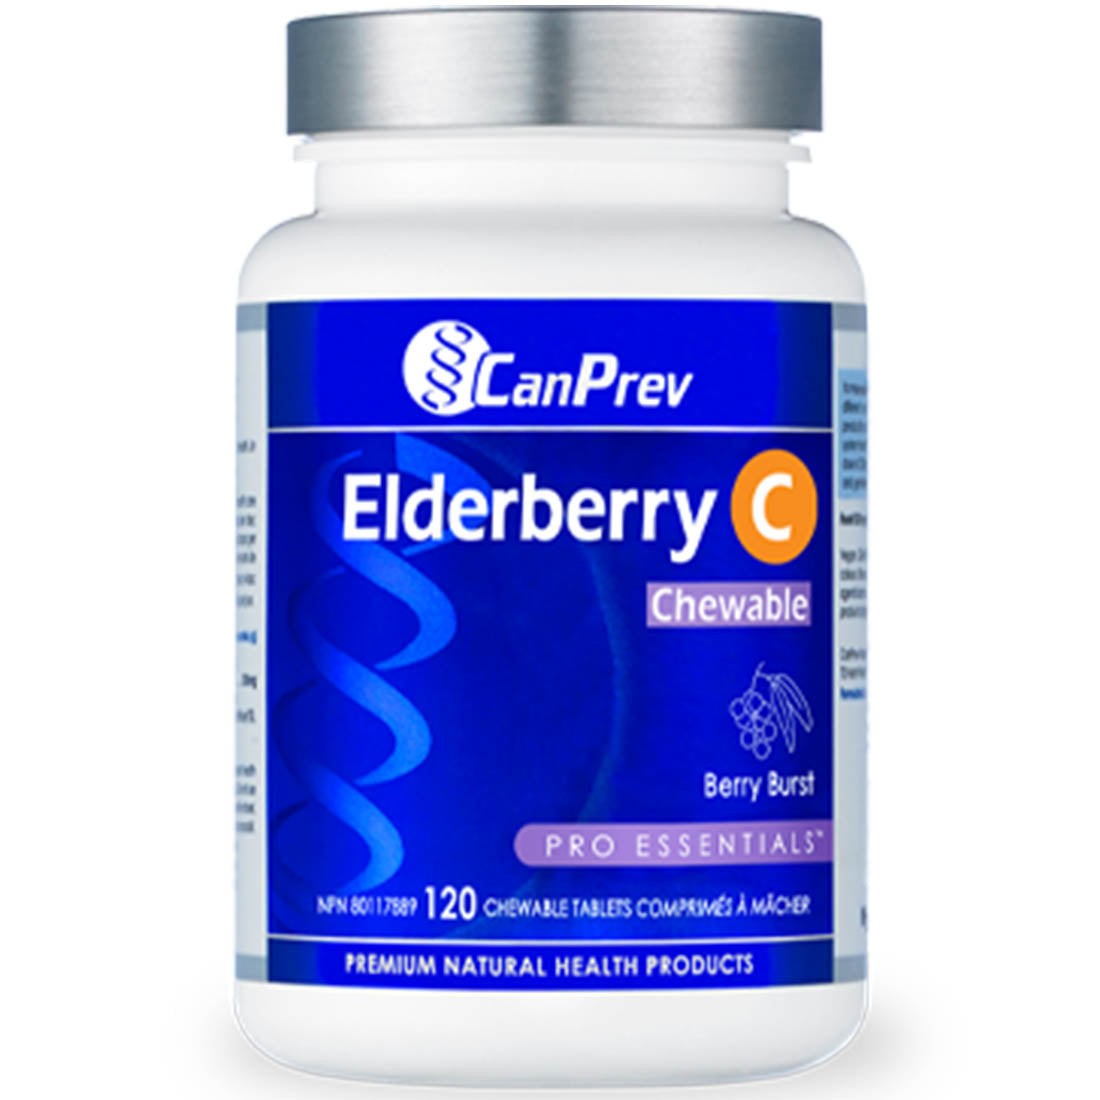 CanPrev Elderberry & Vitamin C 250mg Chewable - BerryBurst, 120 Chewable Tablets